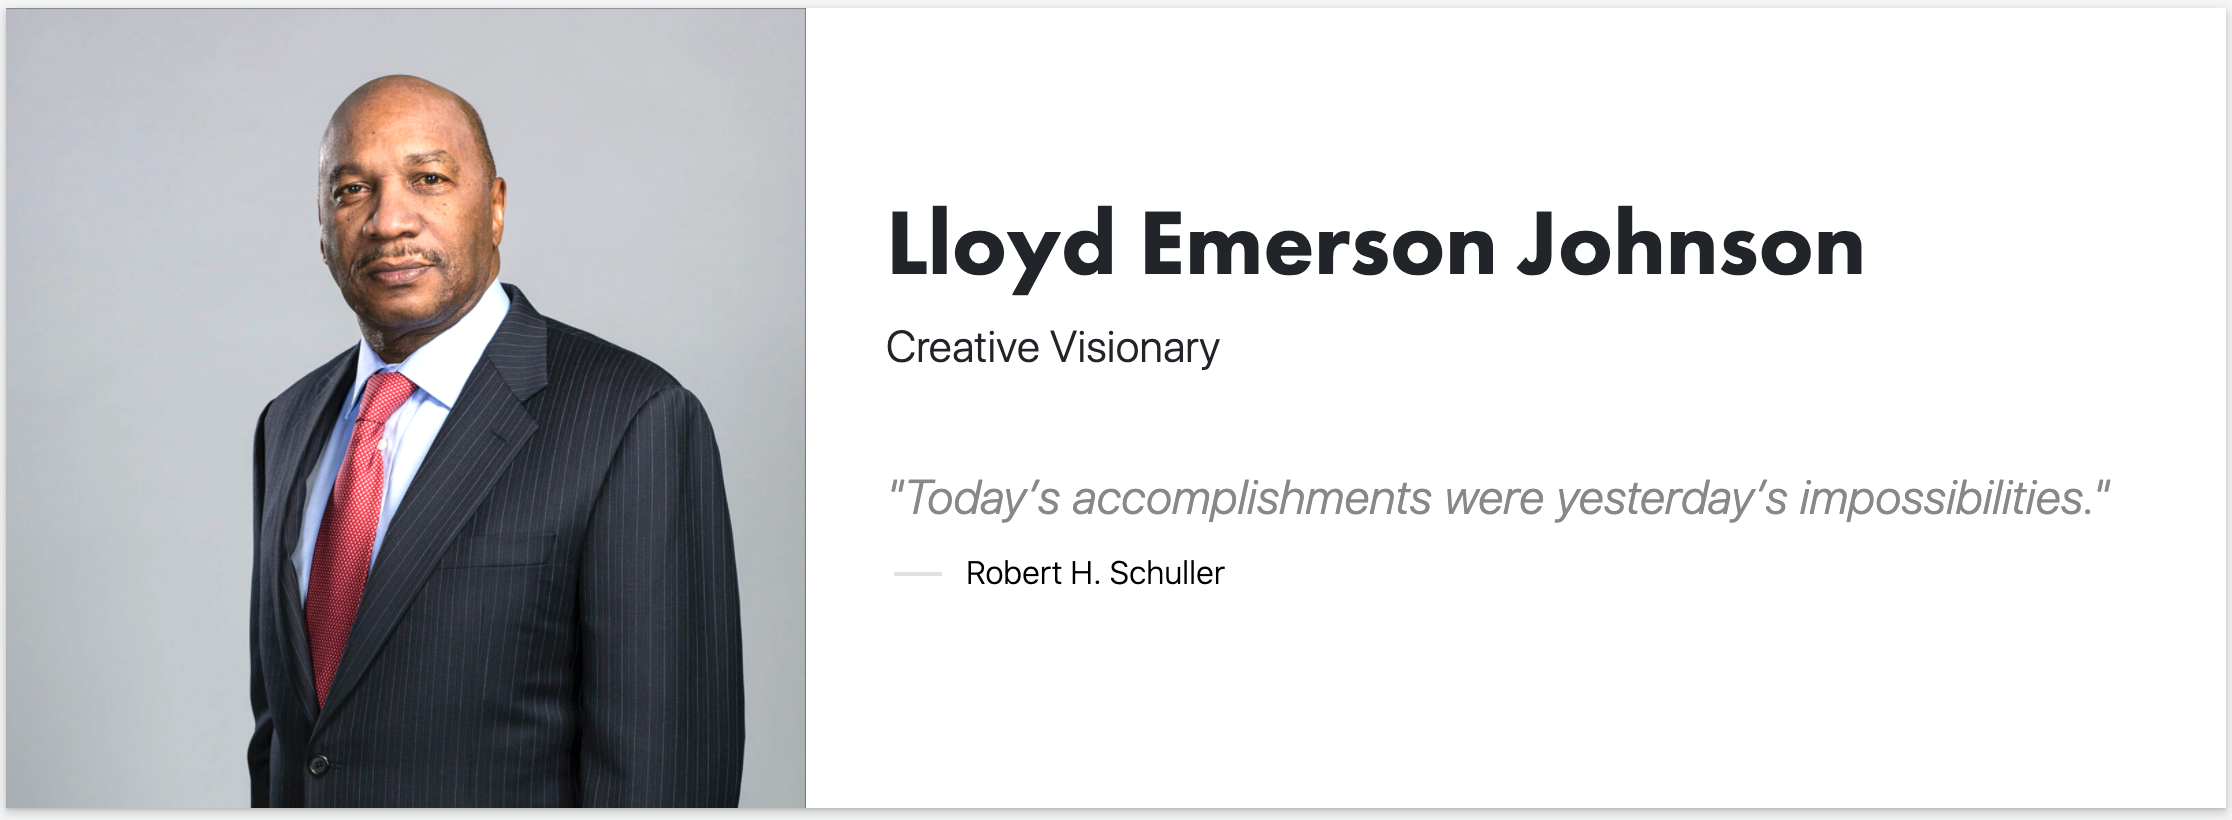 Lloyd Emerson Johnson – CoolBrands Influencers